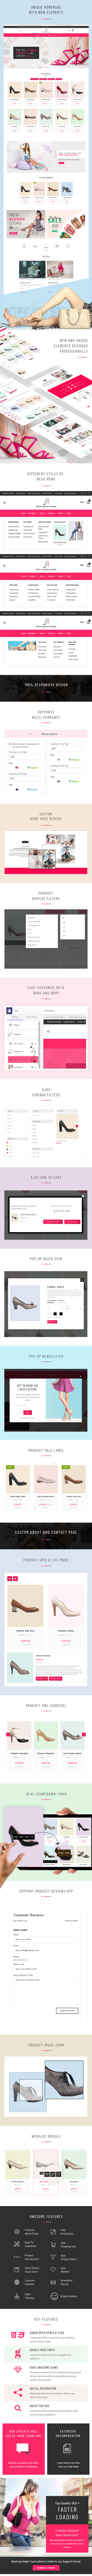 Virtu - Sandals, Shoes Store Shopify Theme - 1